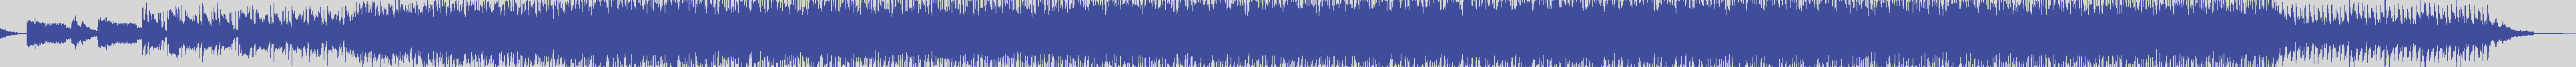 noclouds_chillout [NOC119] Ruggero Dj - Zaffiro [Original Mix] audio wave form